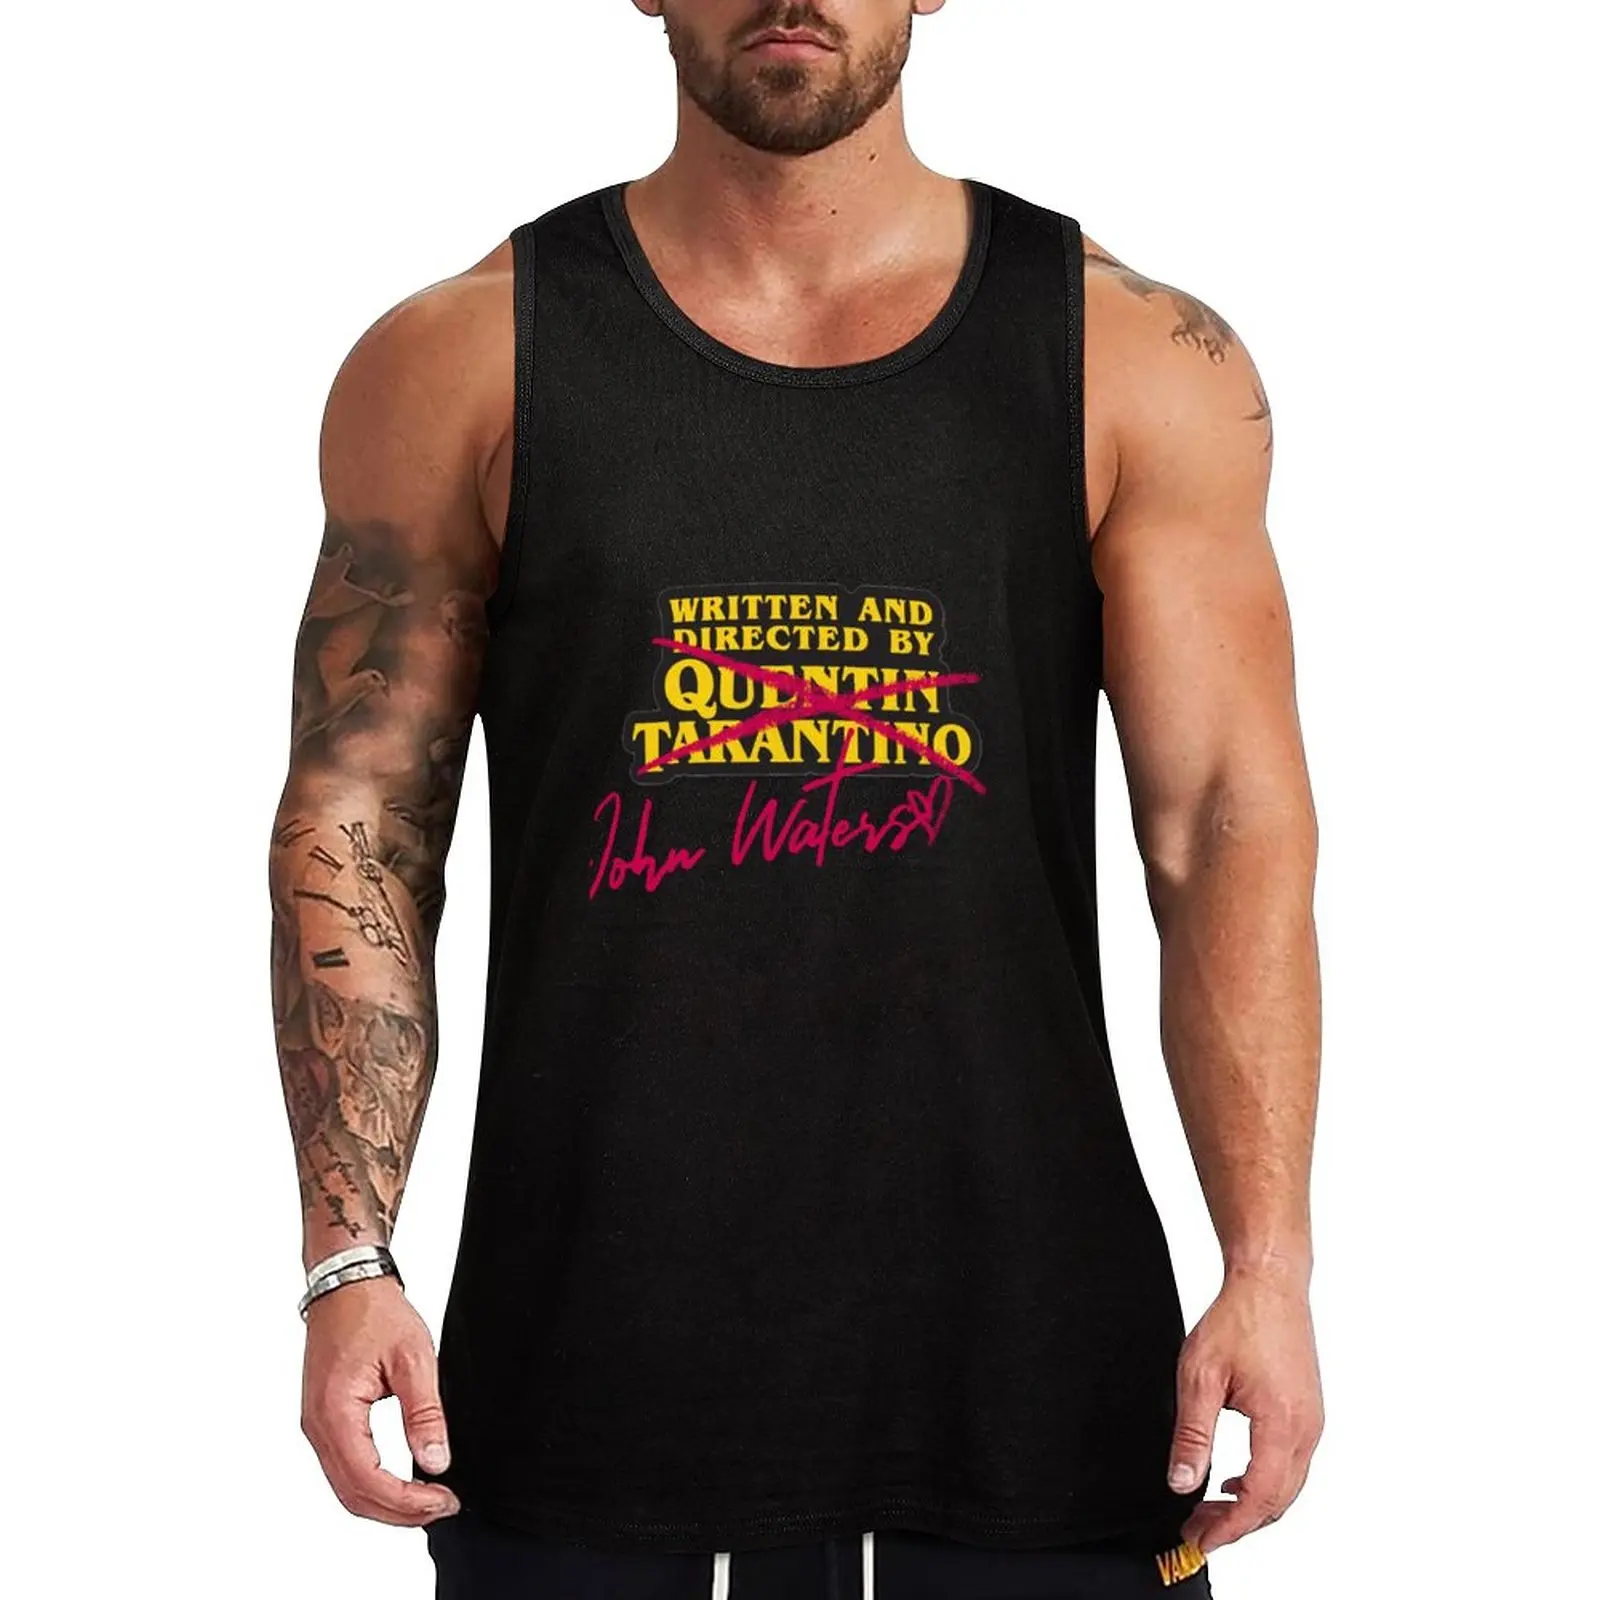 new-john-waters-and-quentin-tarantino-tank-top-men-clothings-t-shirt-men's-gym-sleeveless-vests